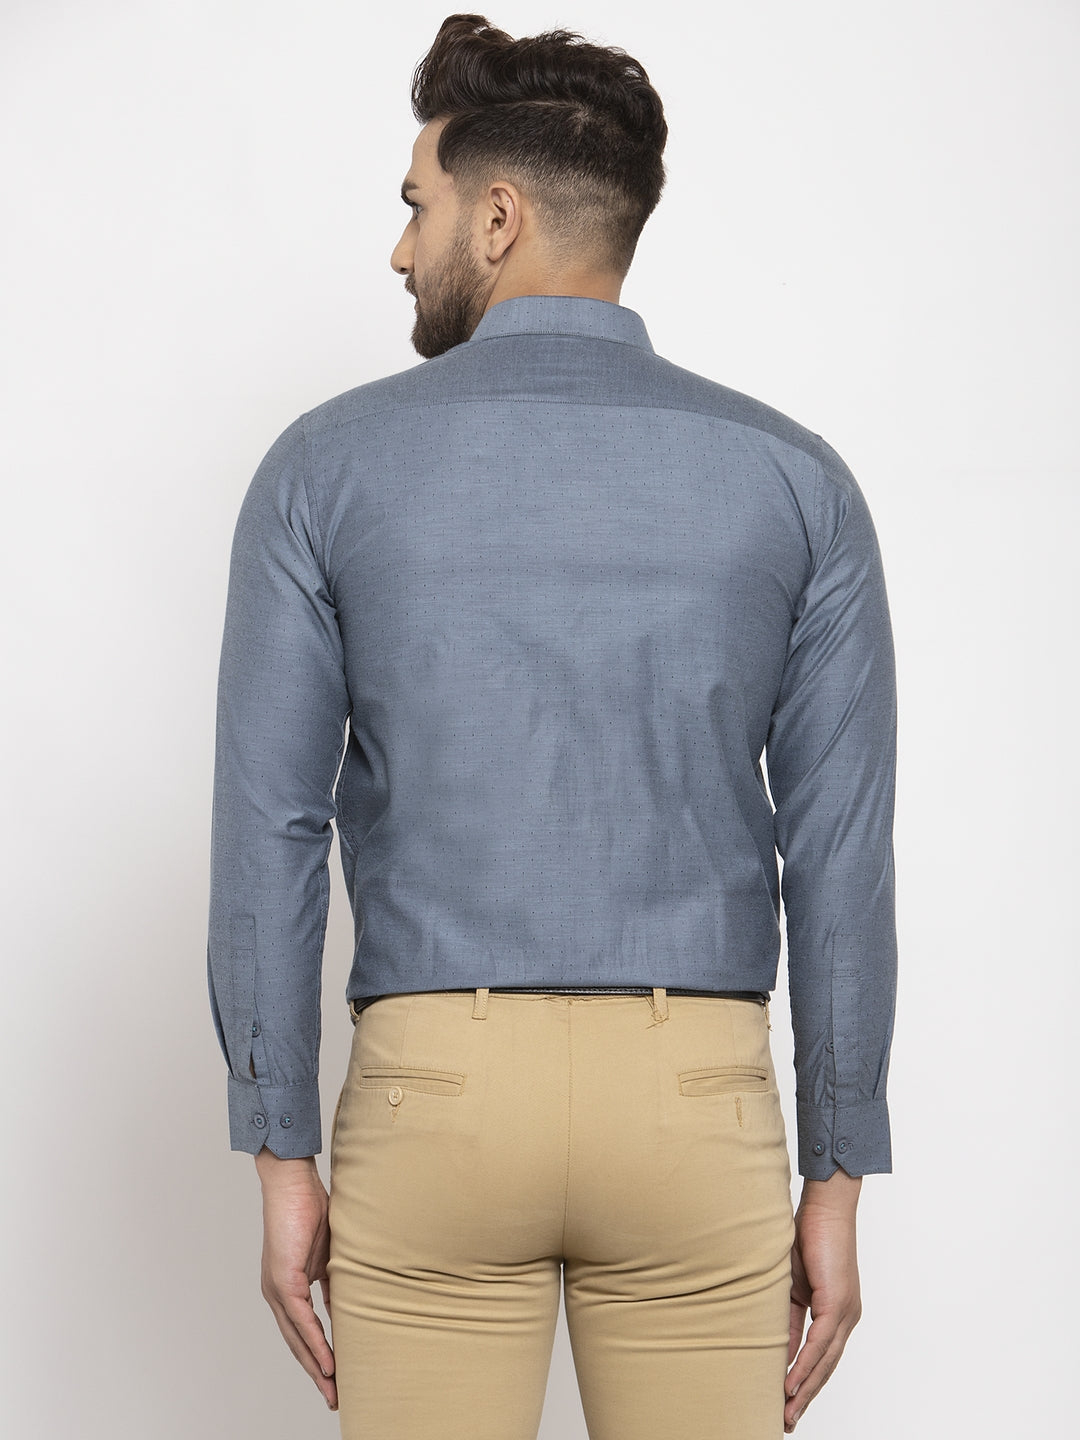 Men's Grey Cotton Polka Dots Formal Shirt's ( SF 761Grey ) - Jainish